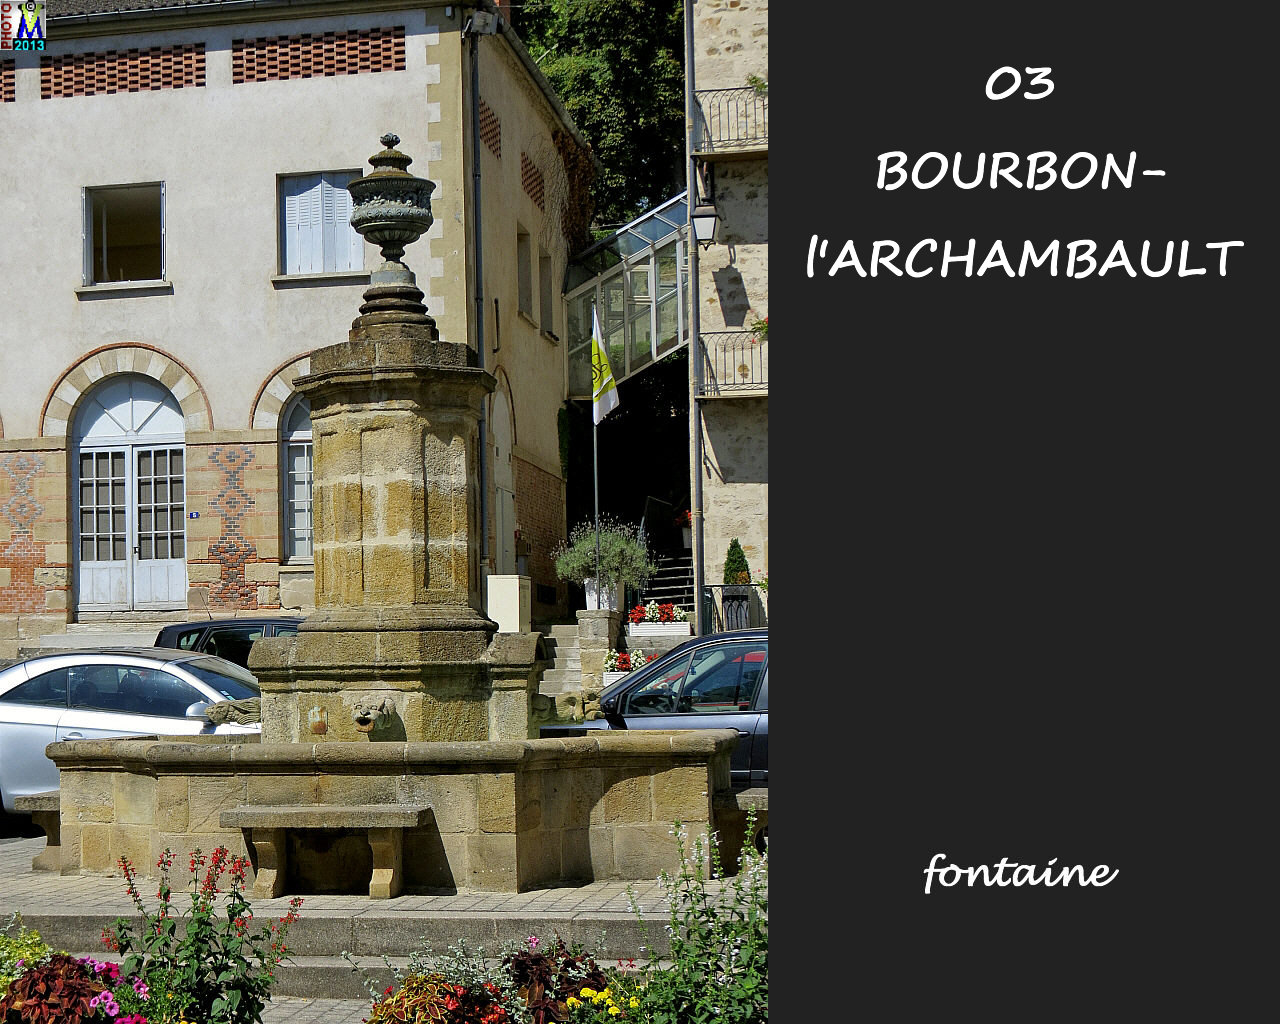 03BOURBON-ARCHAMBAULT_fontaine_100.jpg